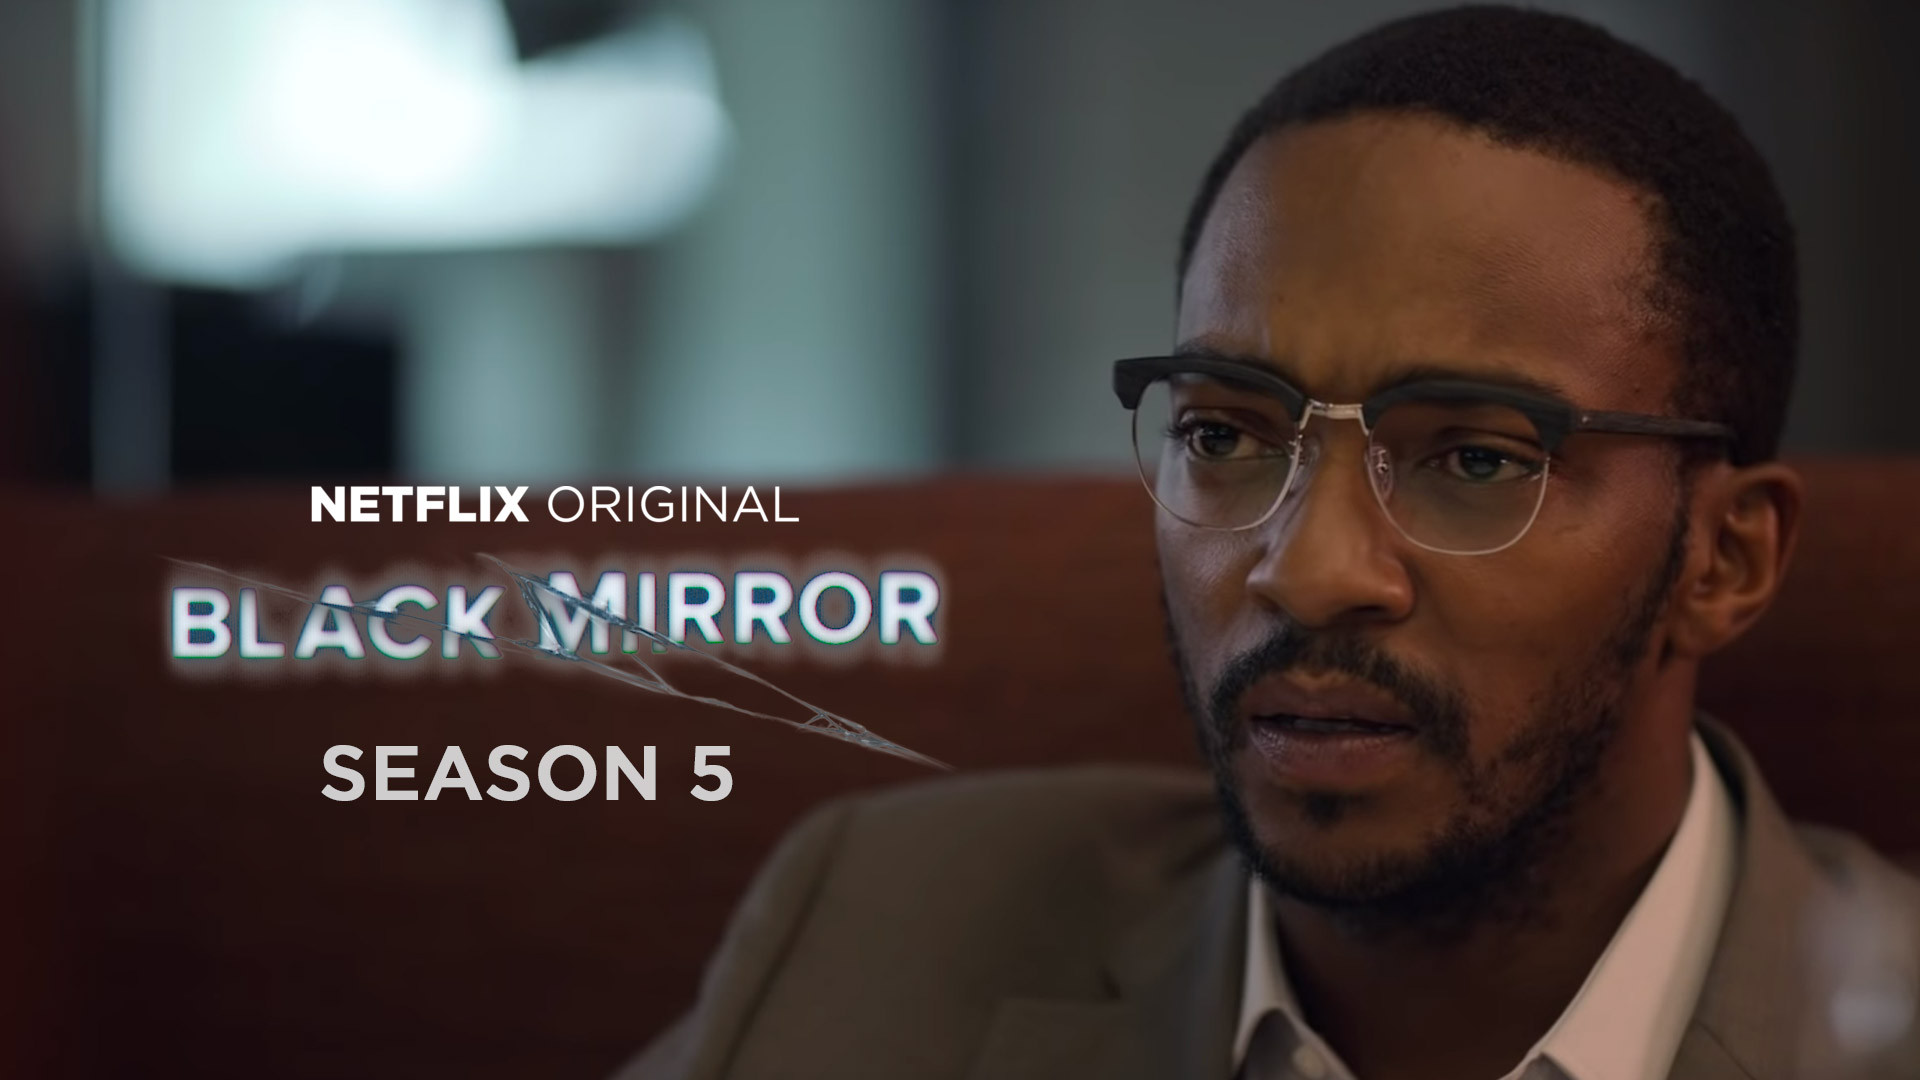 Netflix Black Mirror Season 5 release date, cast and trailer